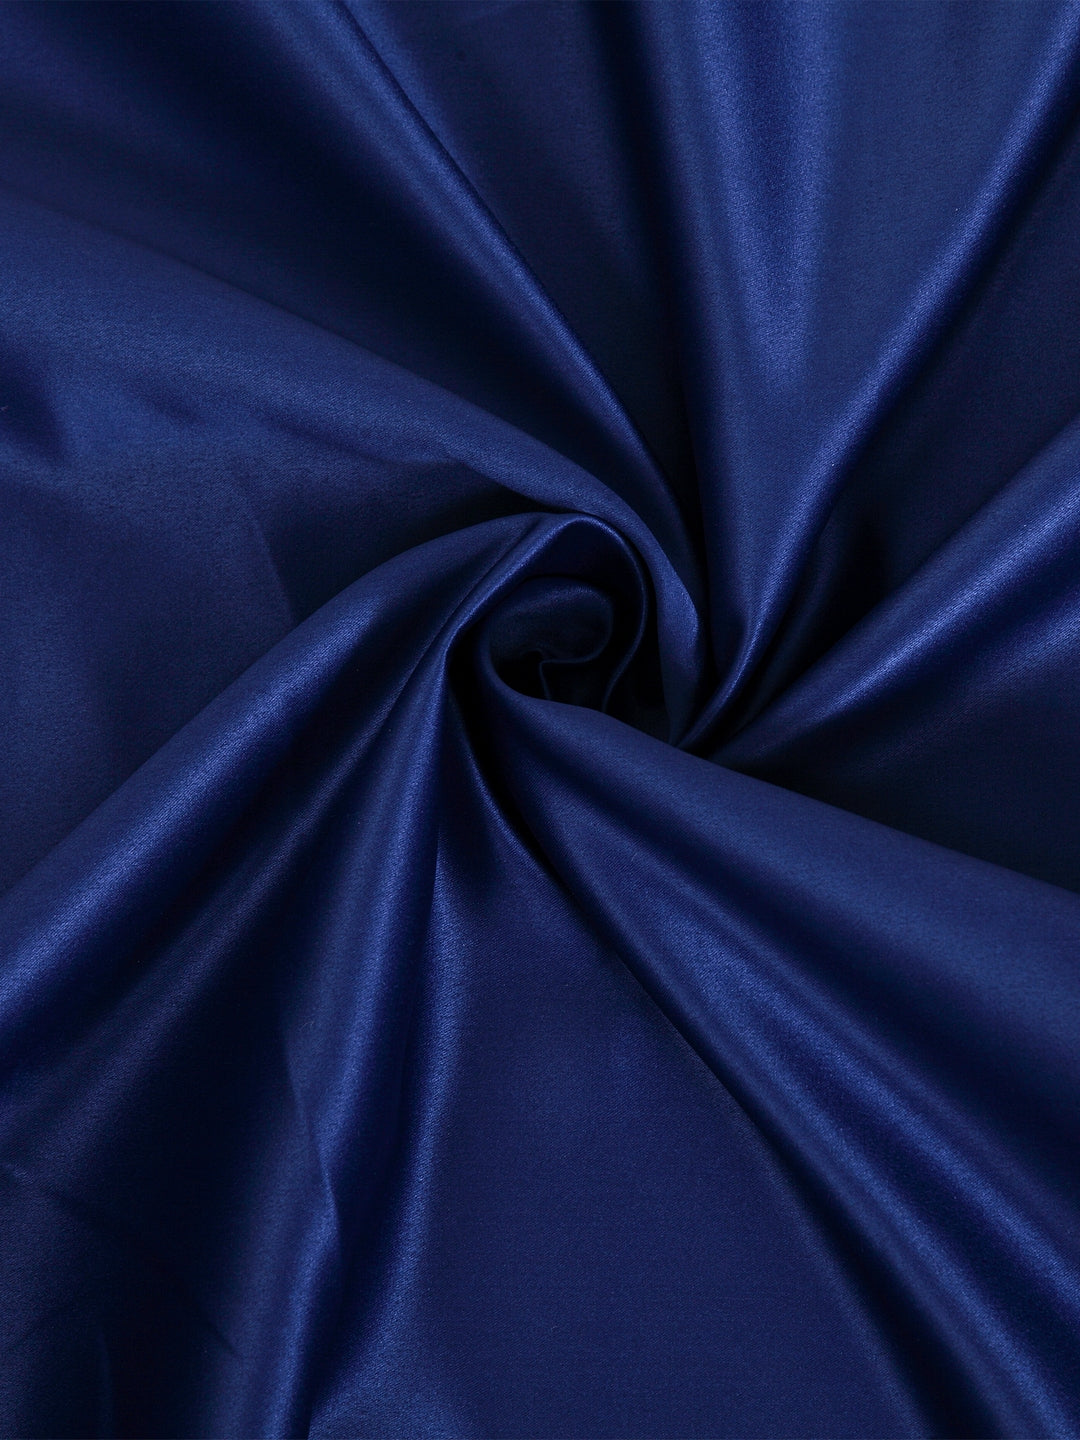 Eyda Blue Color Premium Semi Blackout 1 Pc Long Door Curtain